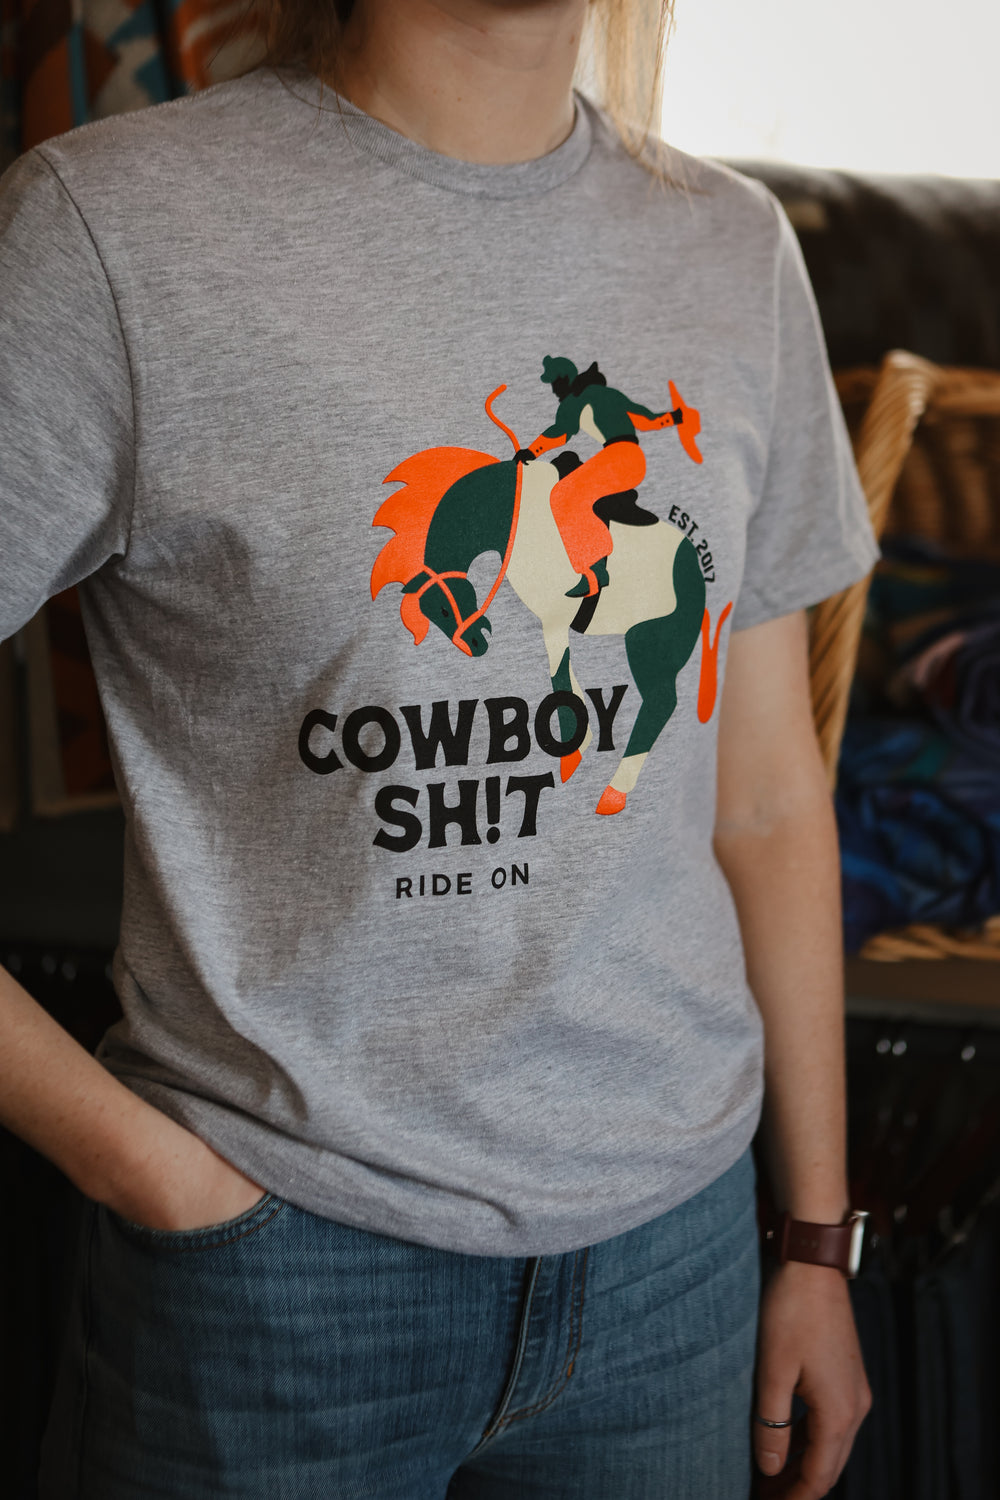 Cowboy Sh!t - Ride On Tee